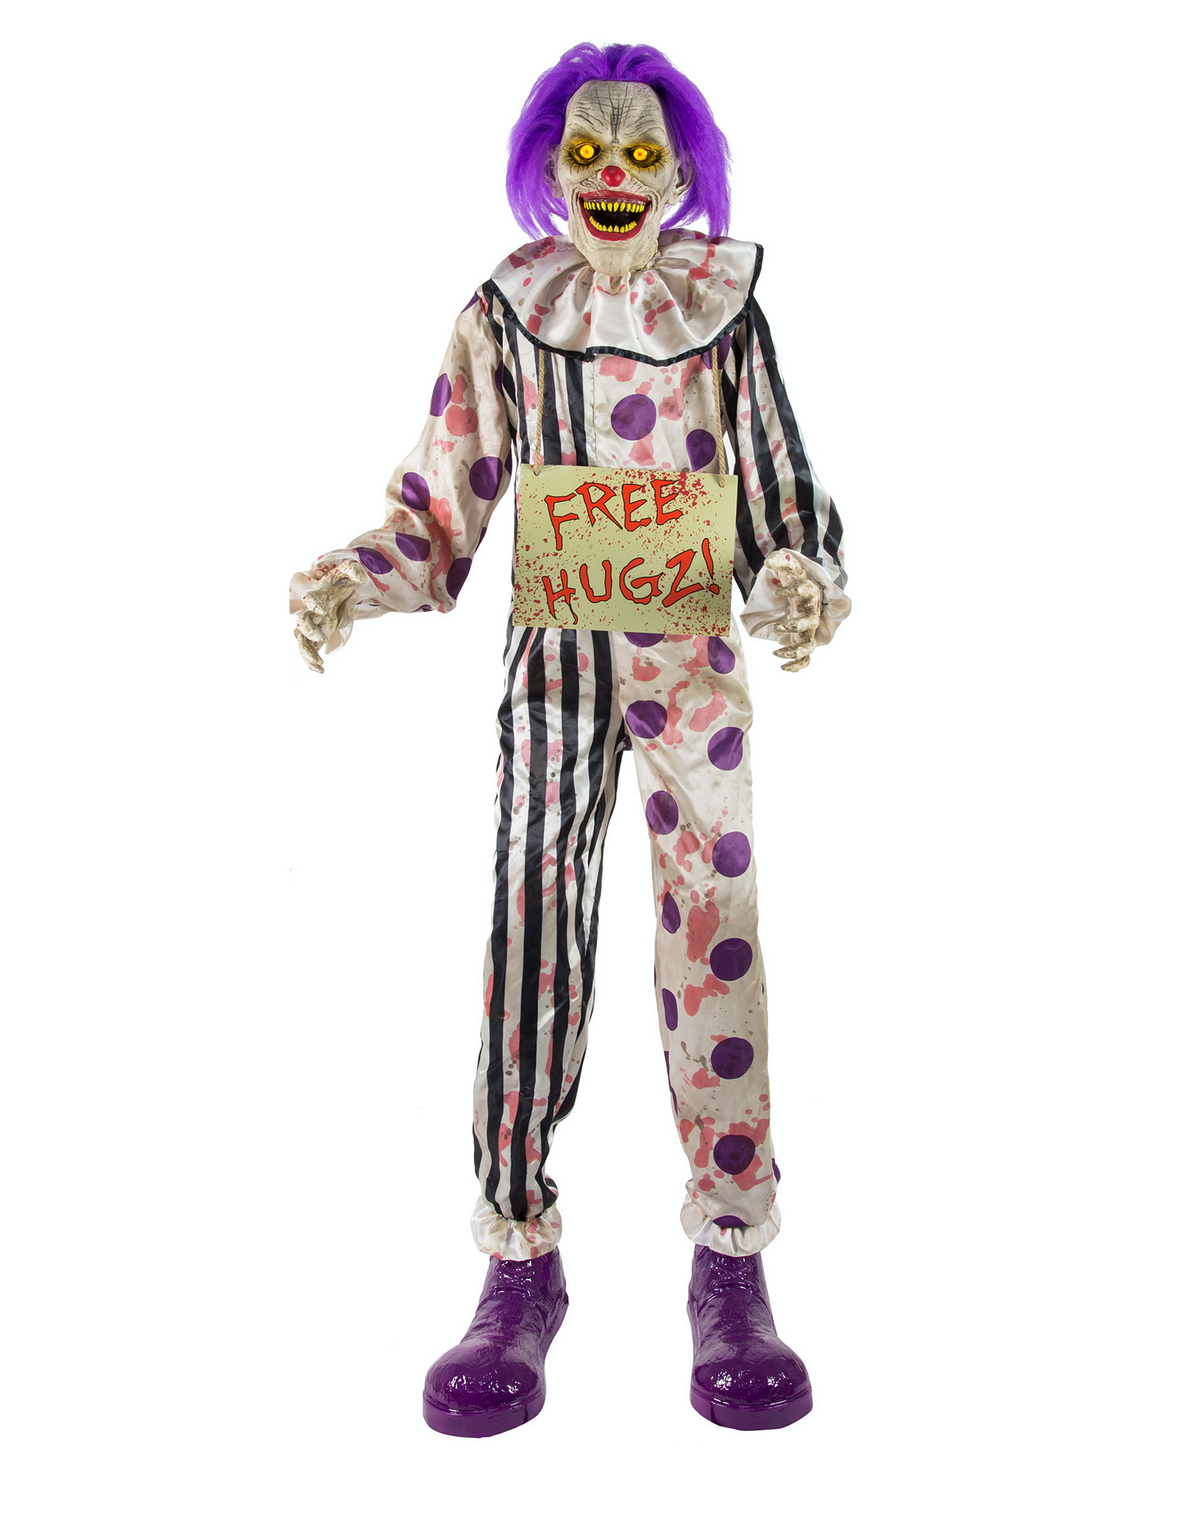 Hugz the Clown | Spirit Halloween Wikia | Fandom